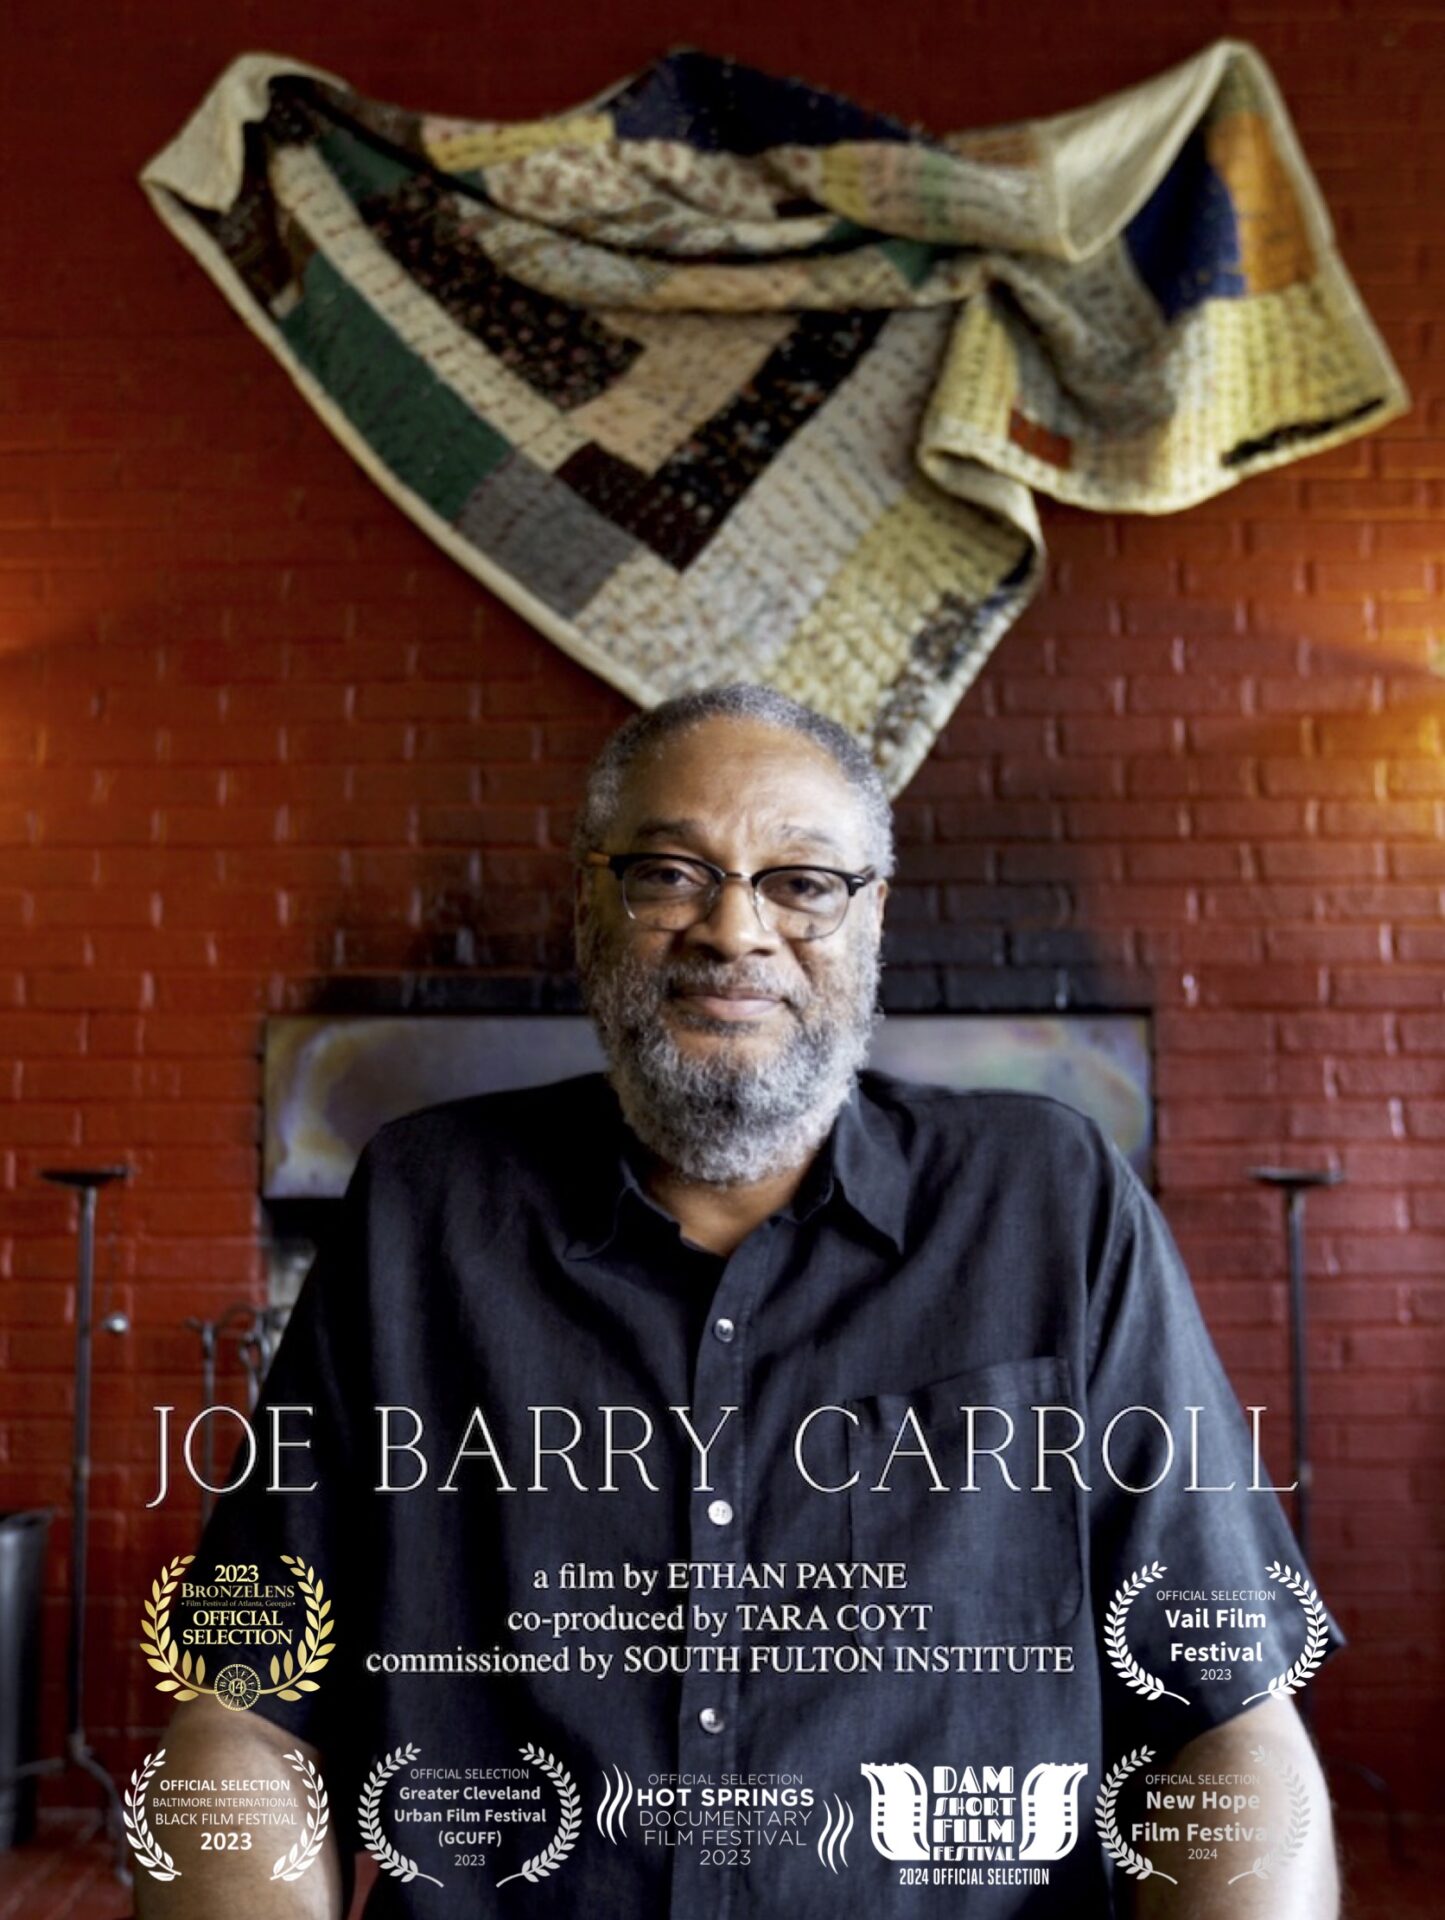 Joe Barry Carroll film poster